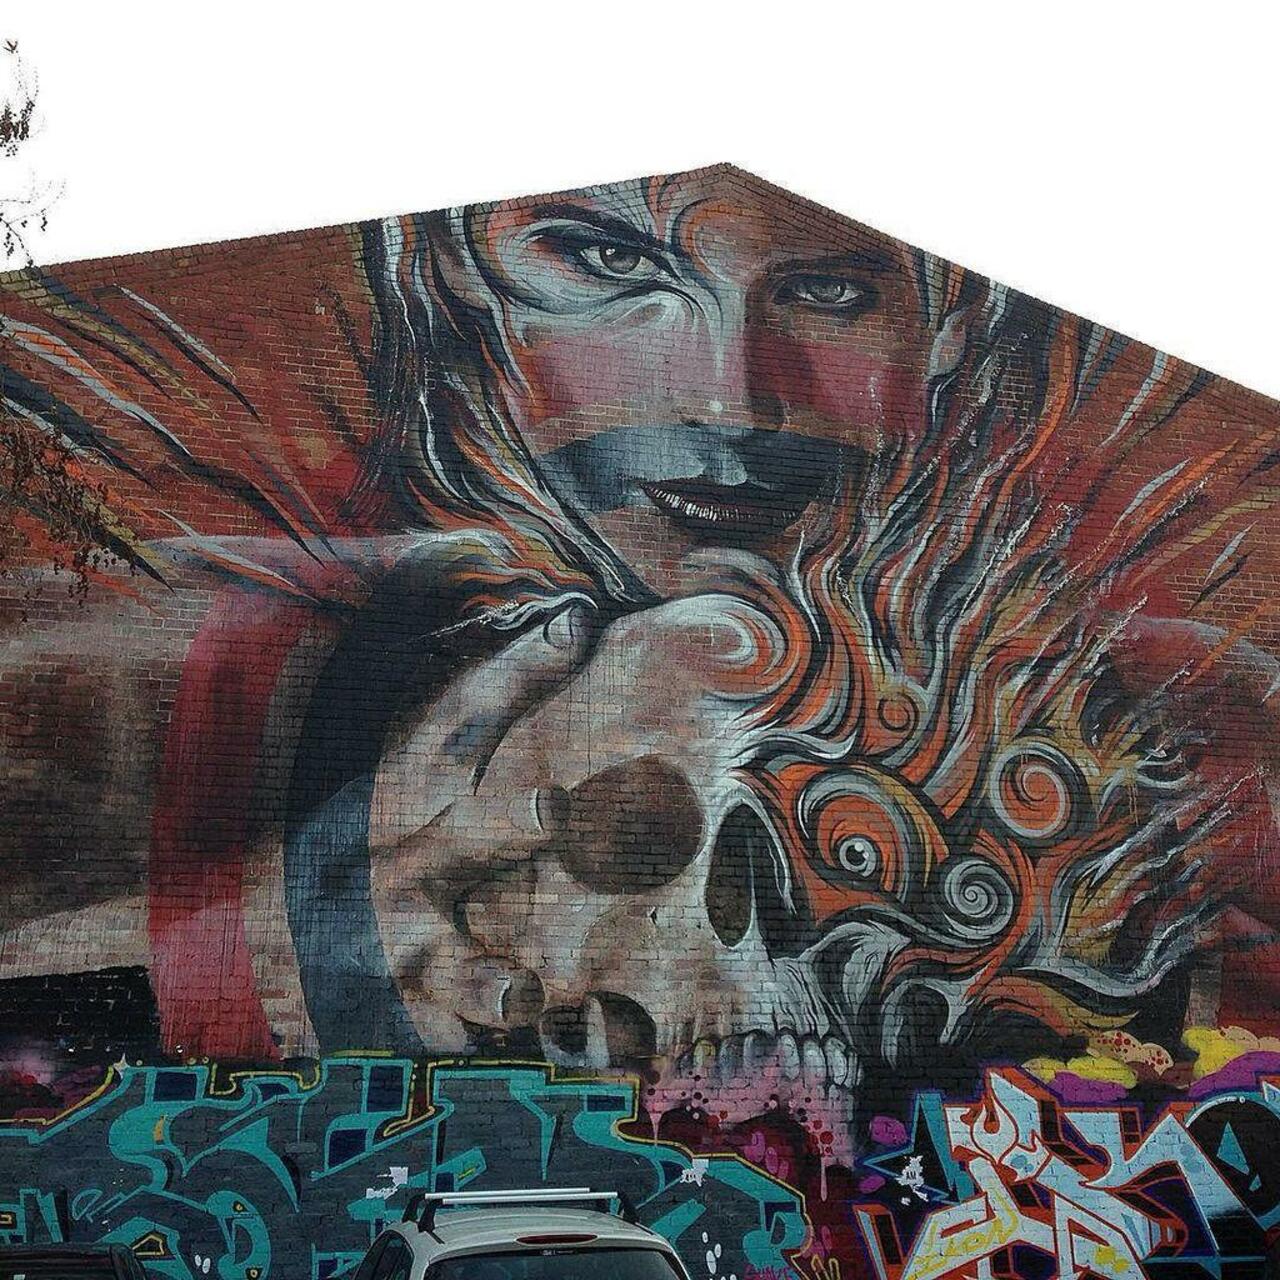 RT @artpushr: via #mrsrosiemackenzie "http://bit.ly/1OpIv5Q" #graffiti #streetart http://t.co/QfIr0Jvmo7